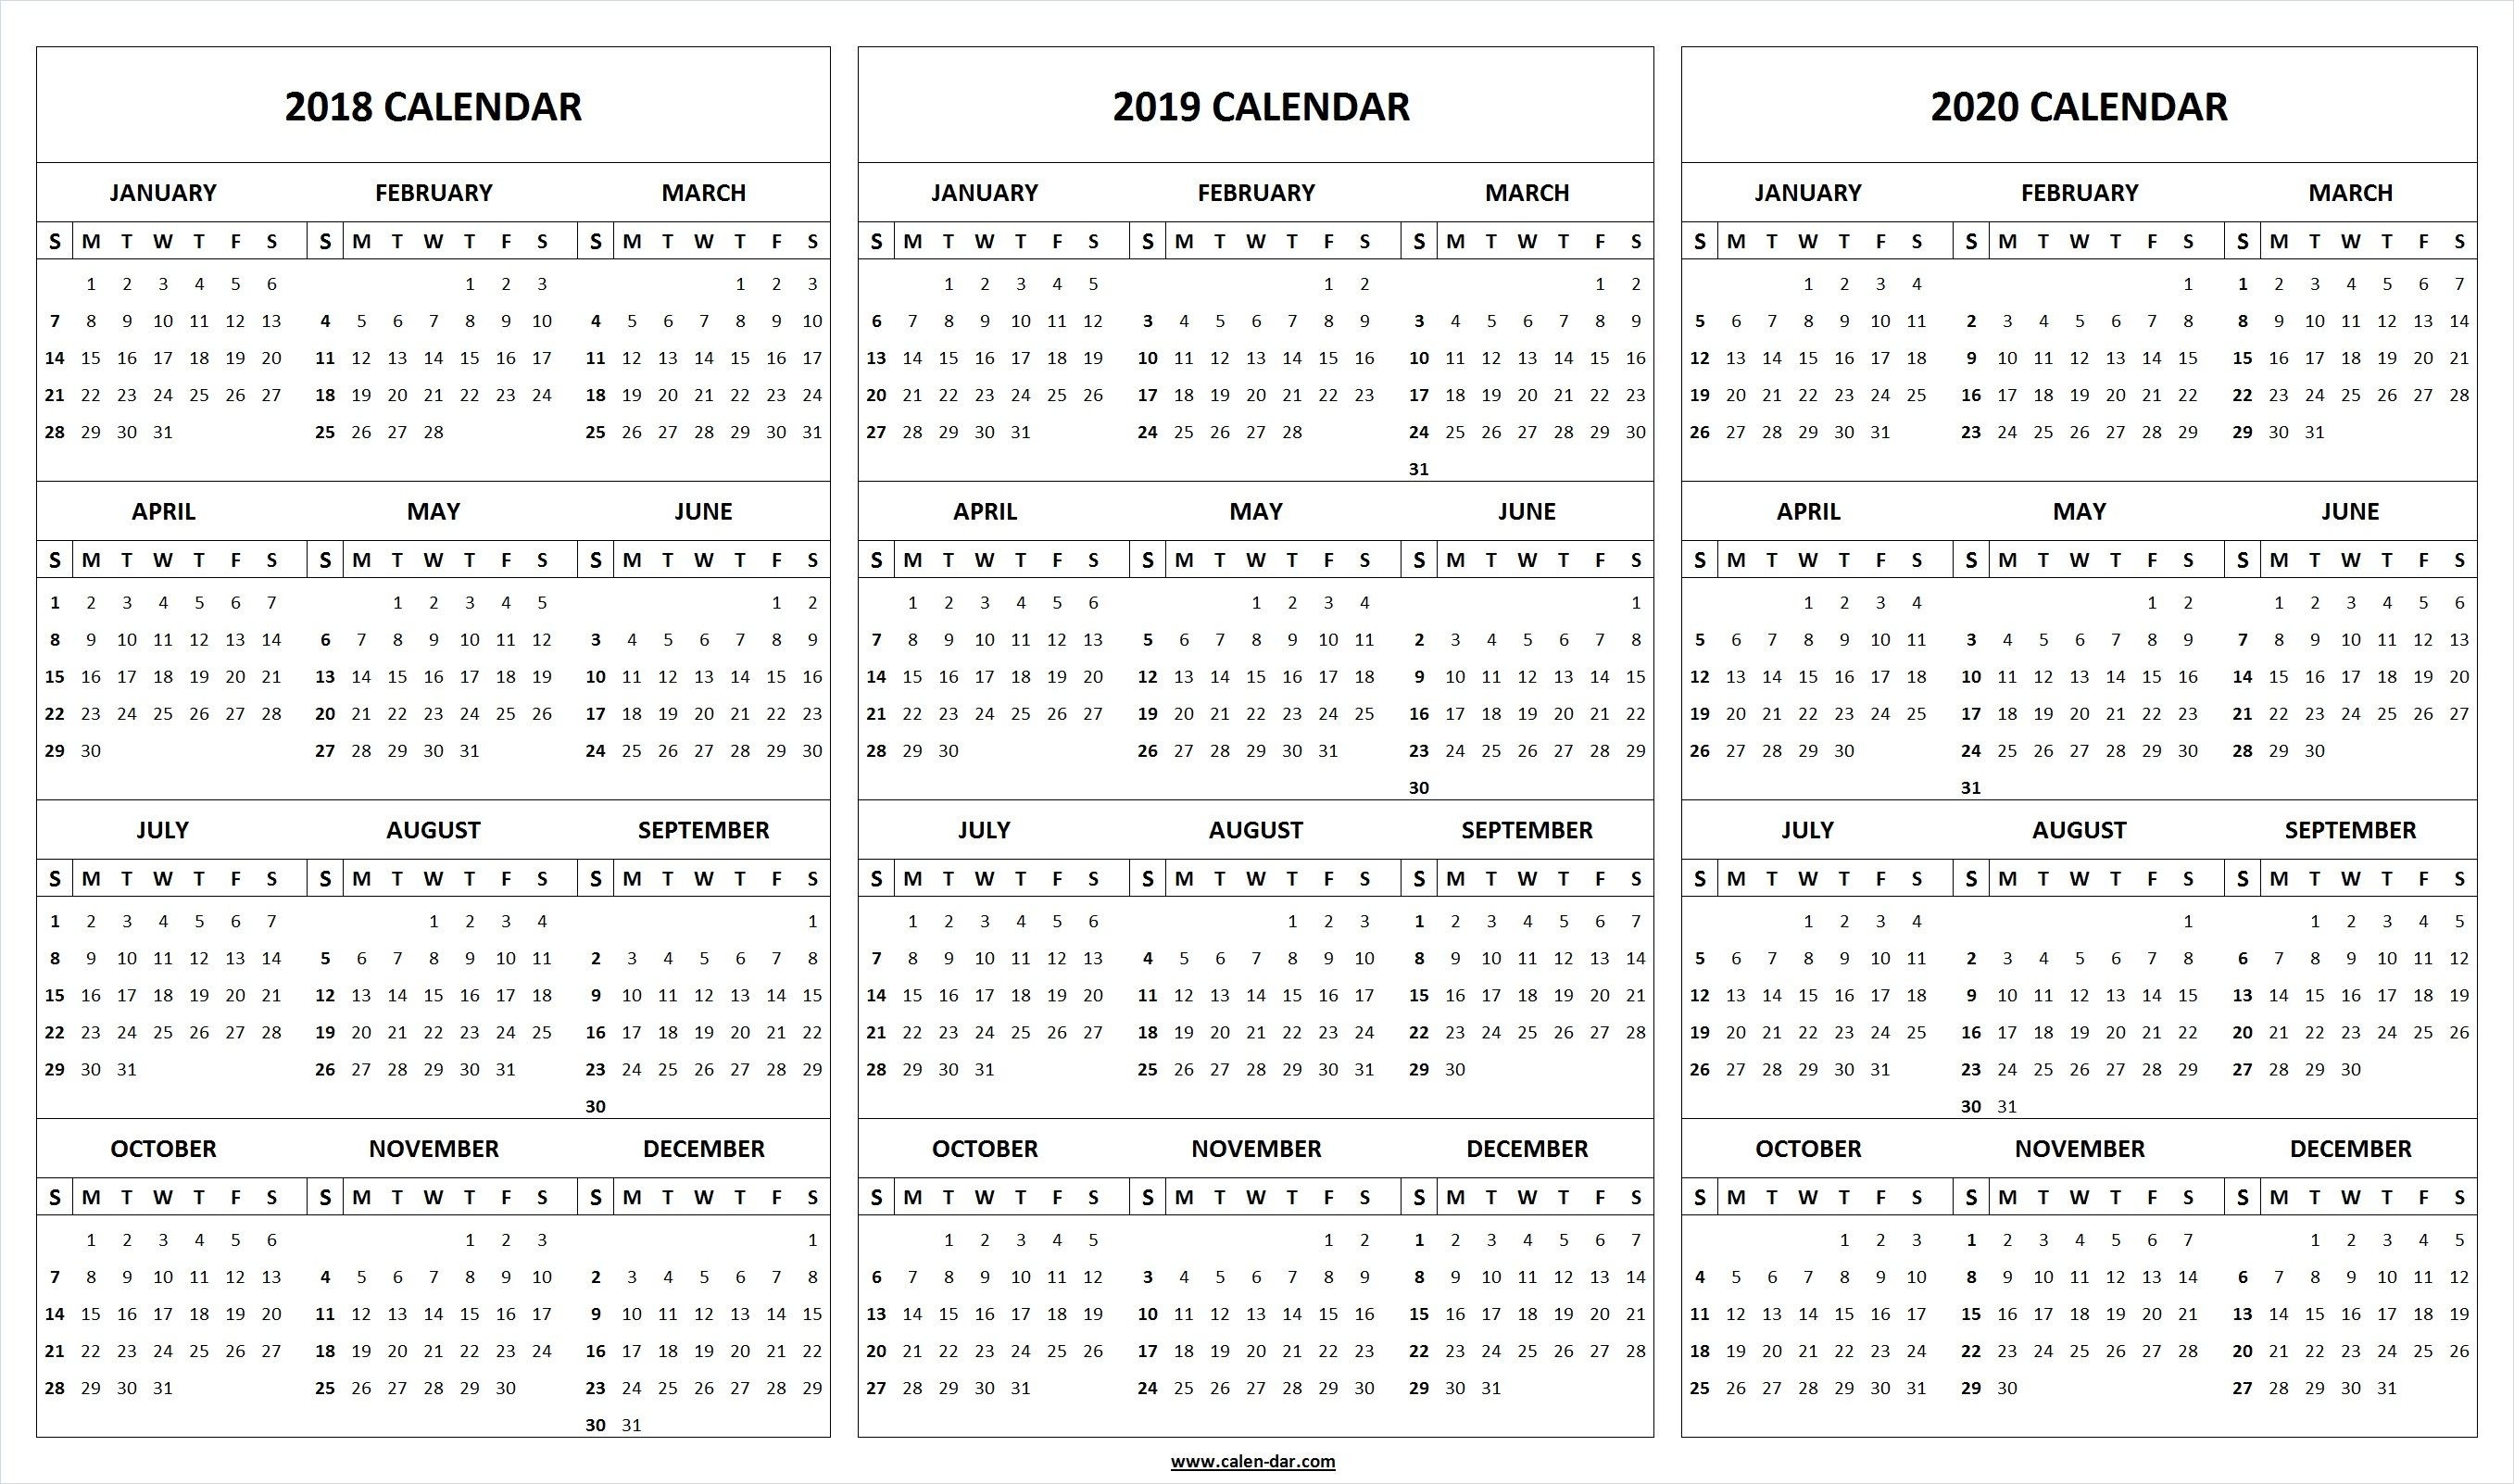 Print Blank 2018 2019 2020 Calendar Template | Organize-2020 Calendar Template Calendar Labs